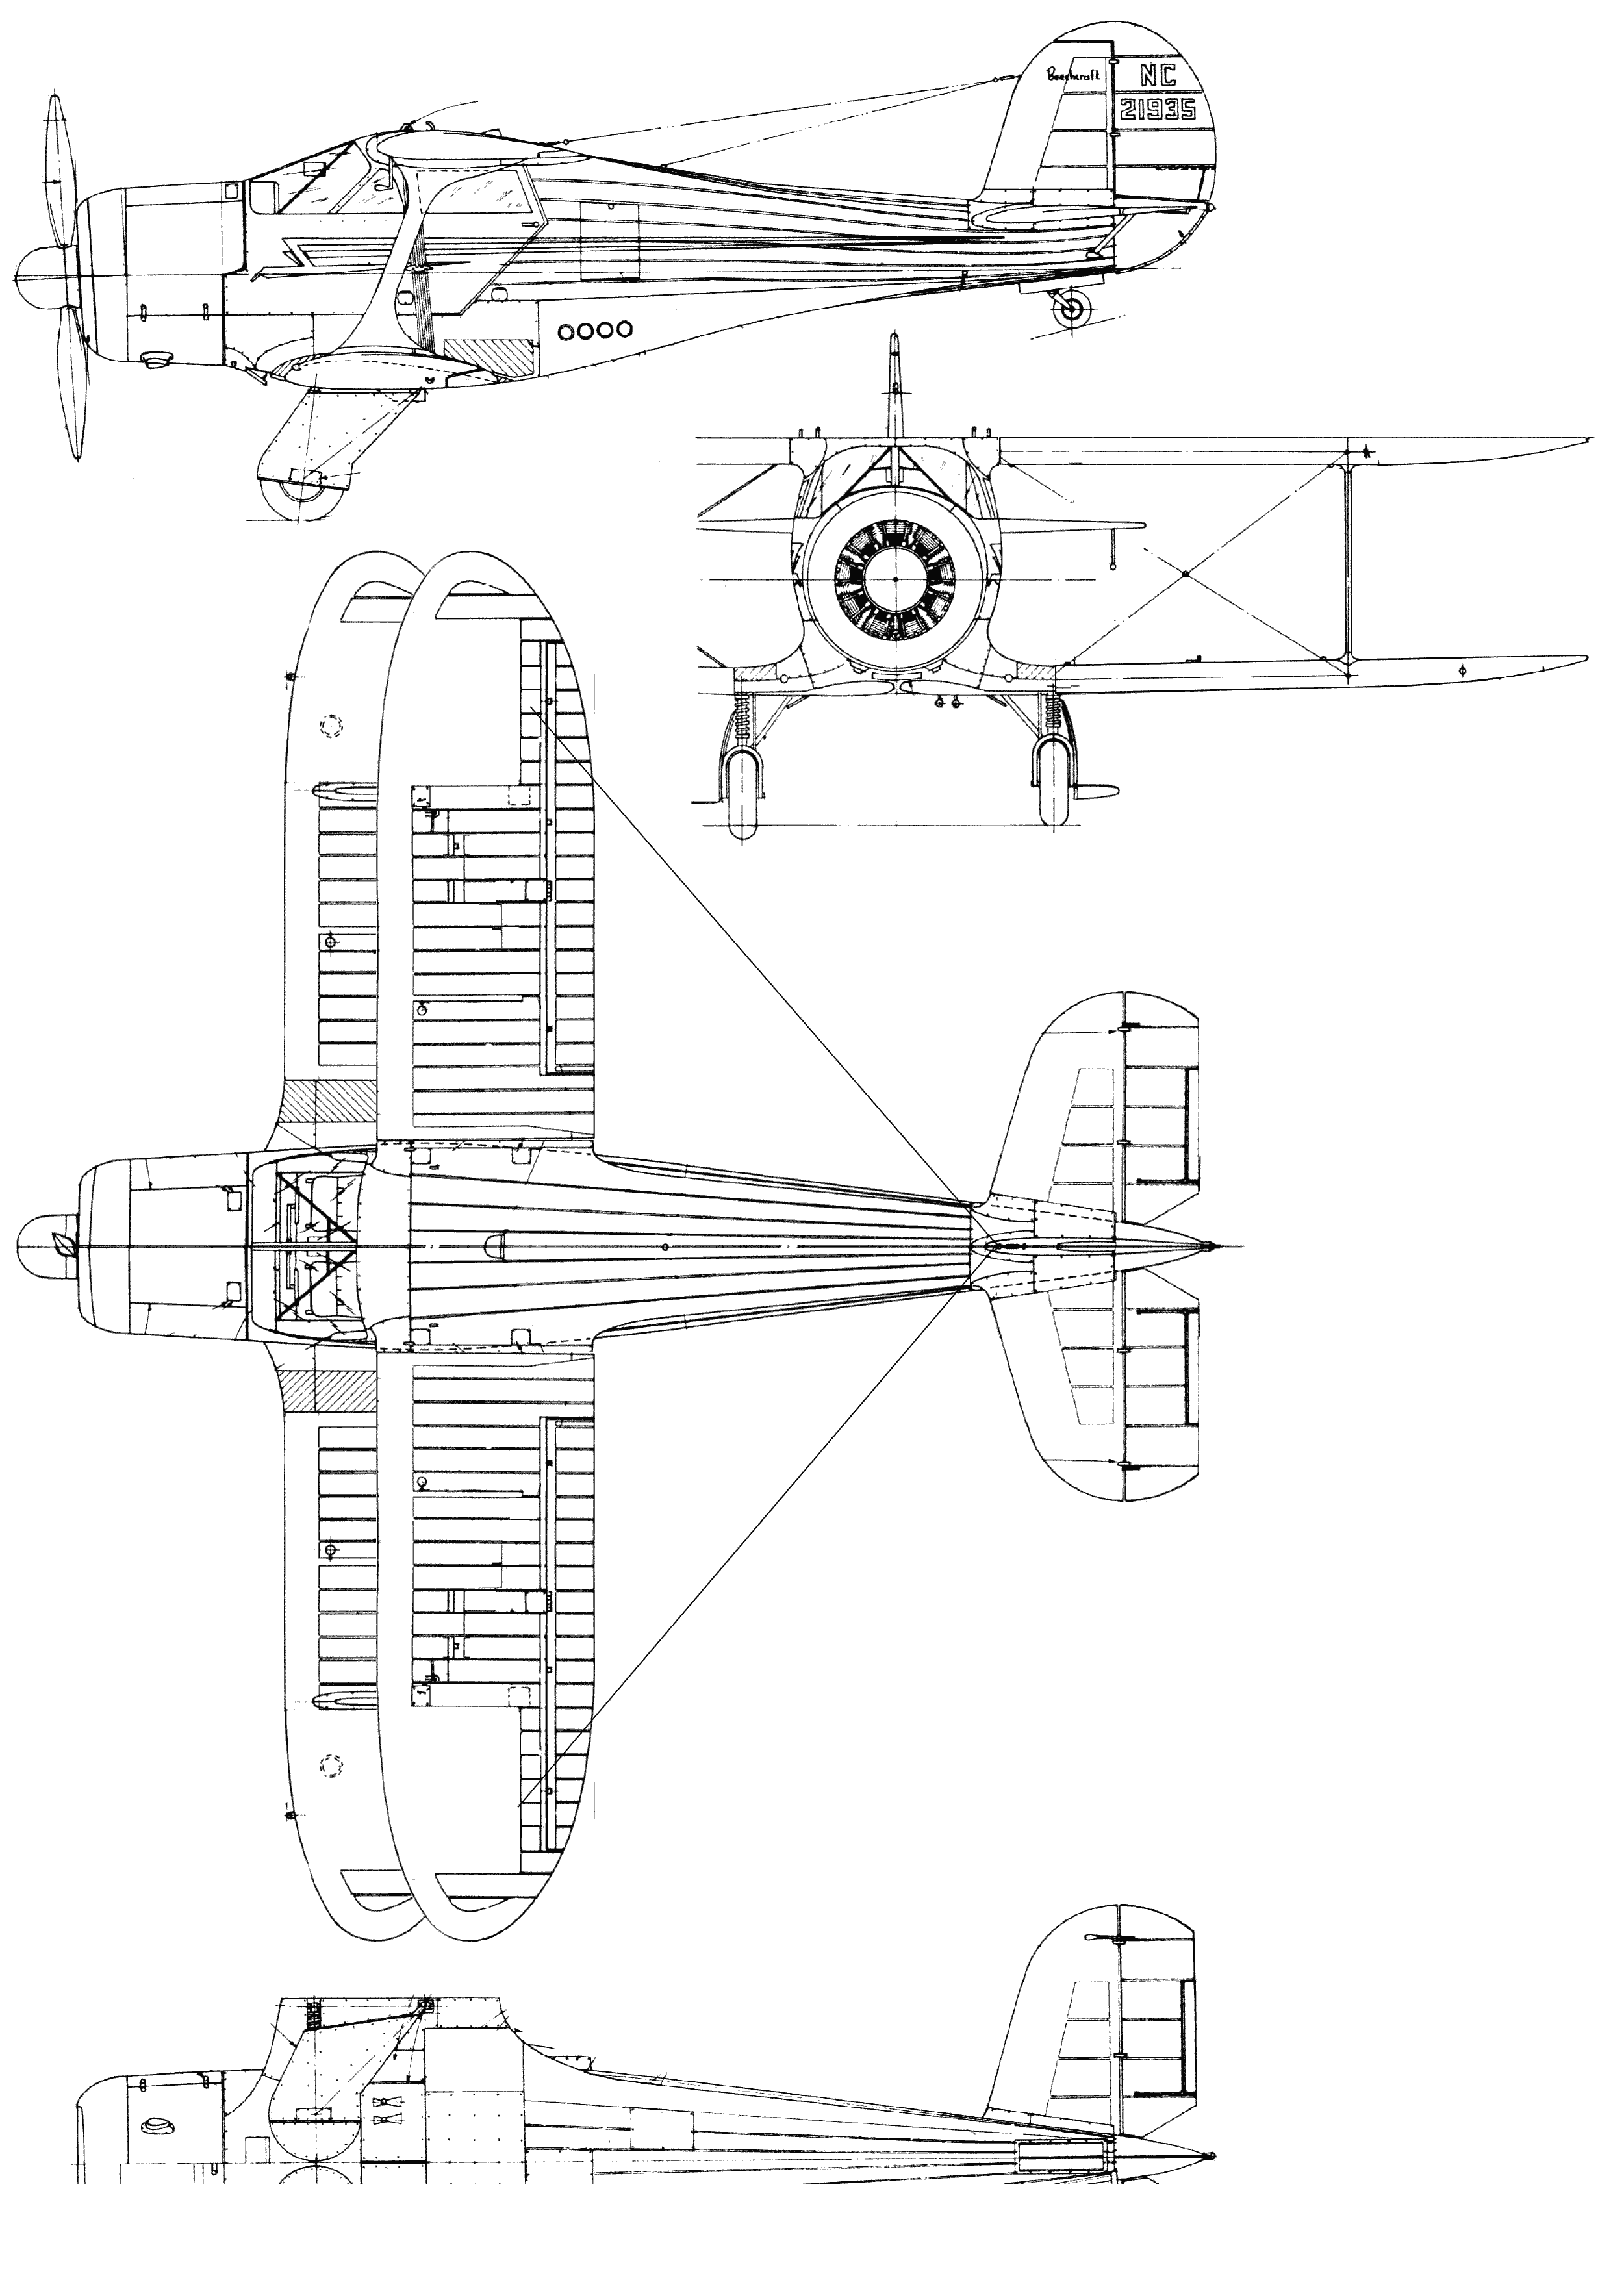 Beechcraft Model 17 Staggerwing blueprint